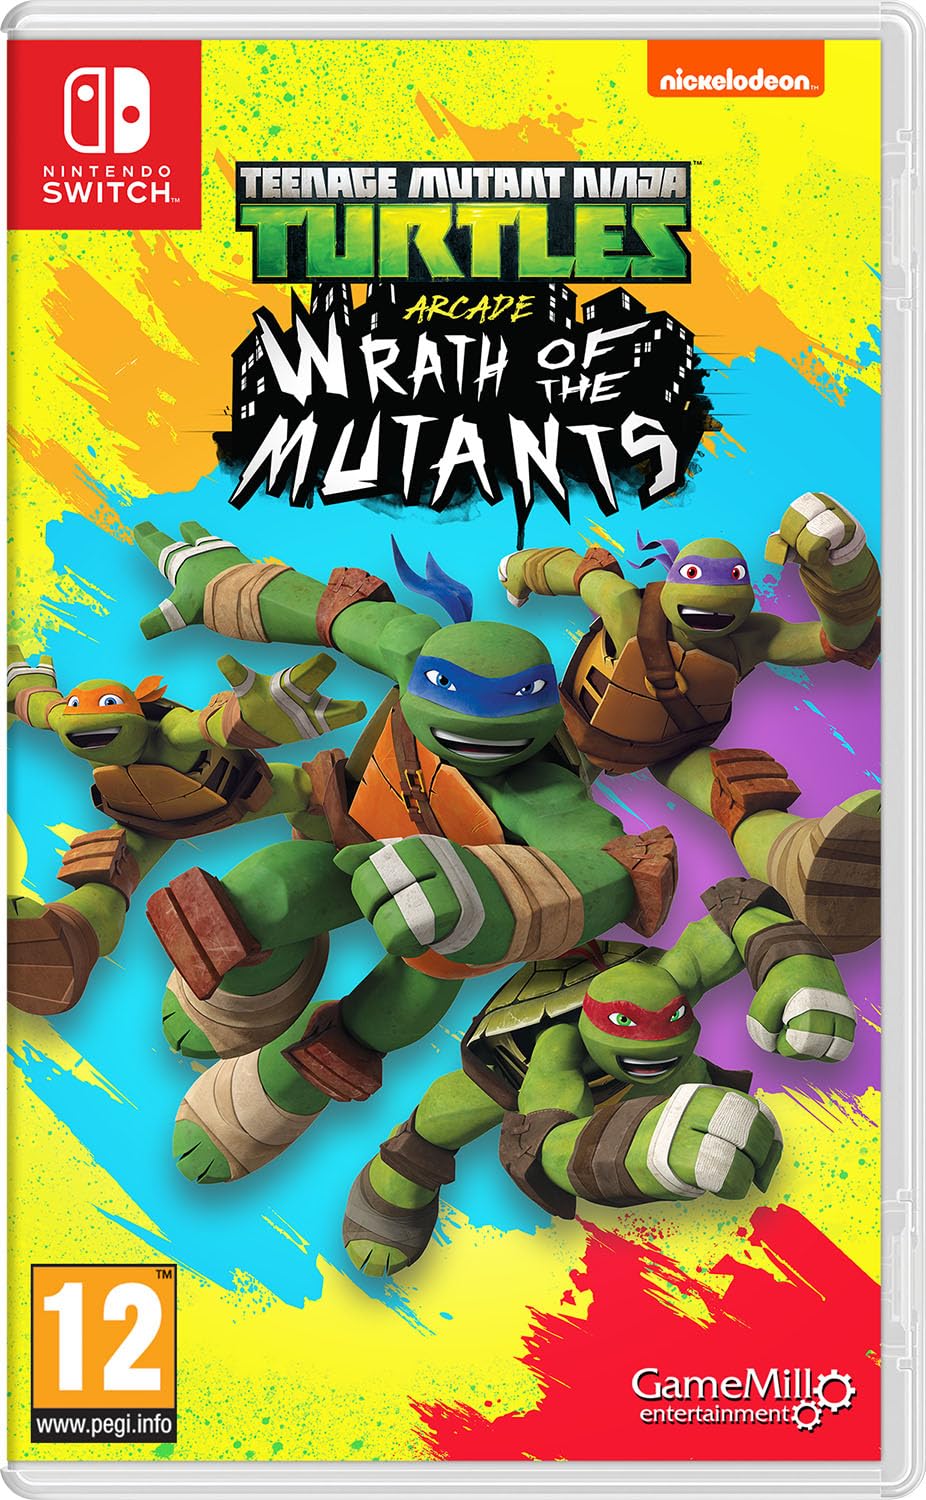 Achat Teenage Mutant Ninja Turtles Arcade Wrath of the Mutants Nintendo Switch uAmgiP5sq frais